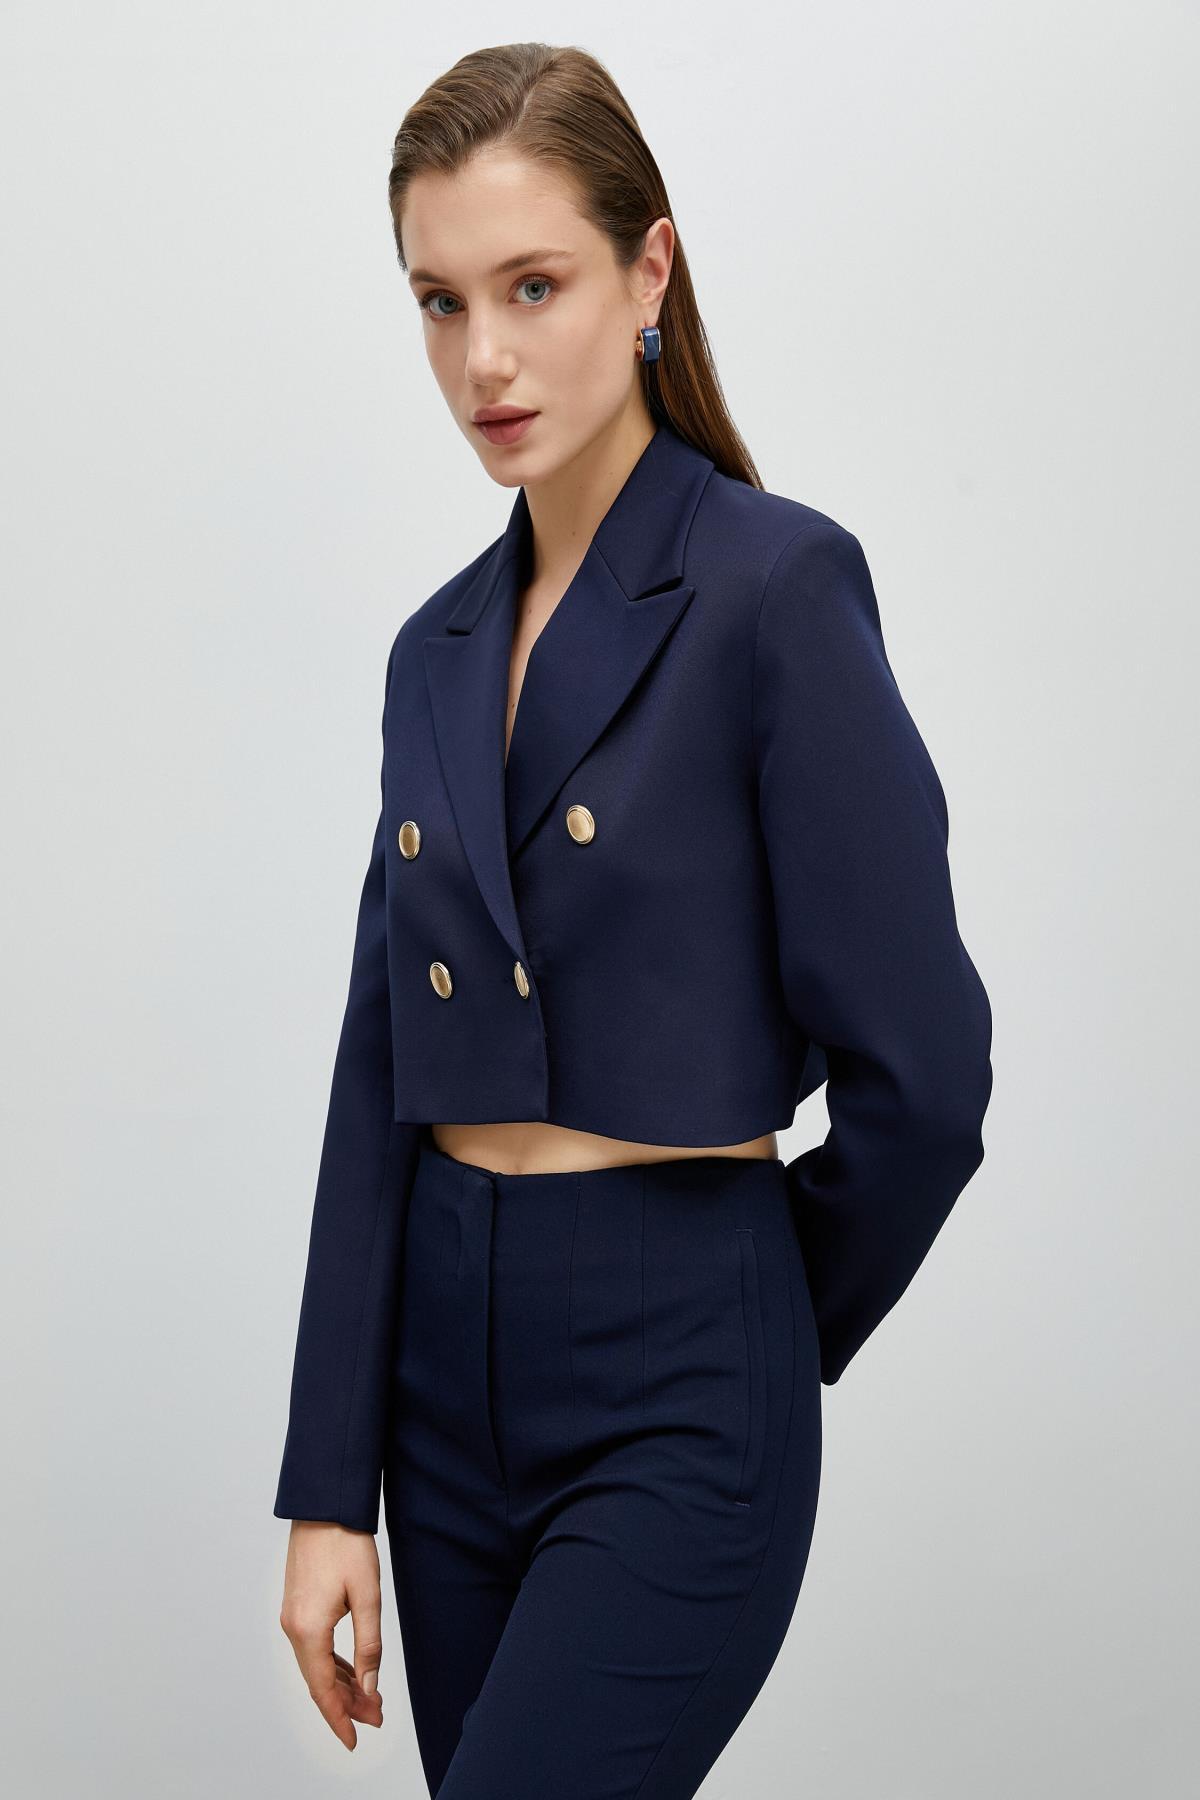 KOTON Women's Navy Blue Jacket